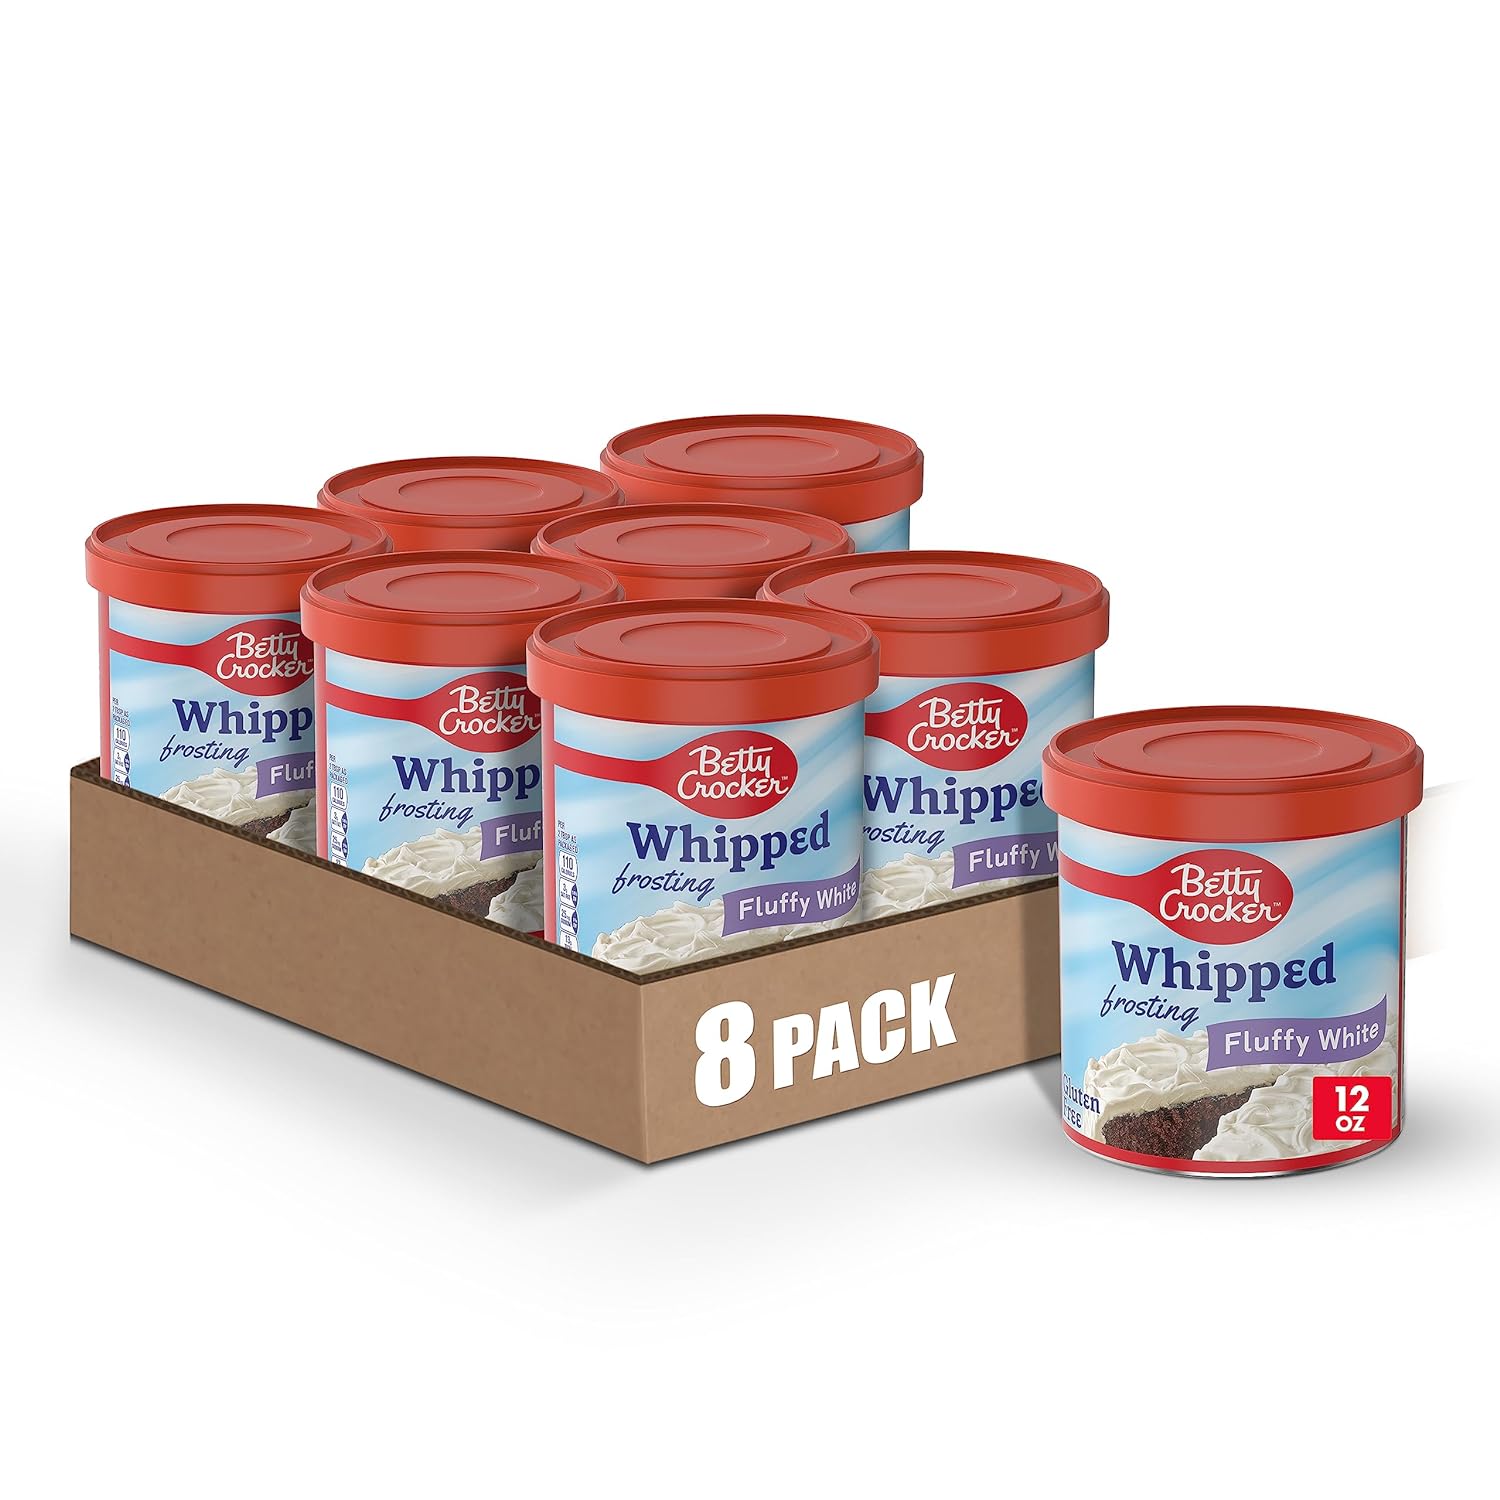 Betty Crocker Gluten Free Whipped Fluffy White Frosting, 12 oz. (Pack of 8)